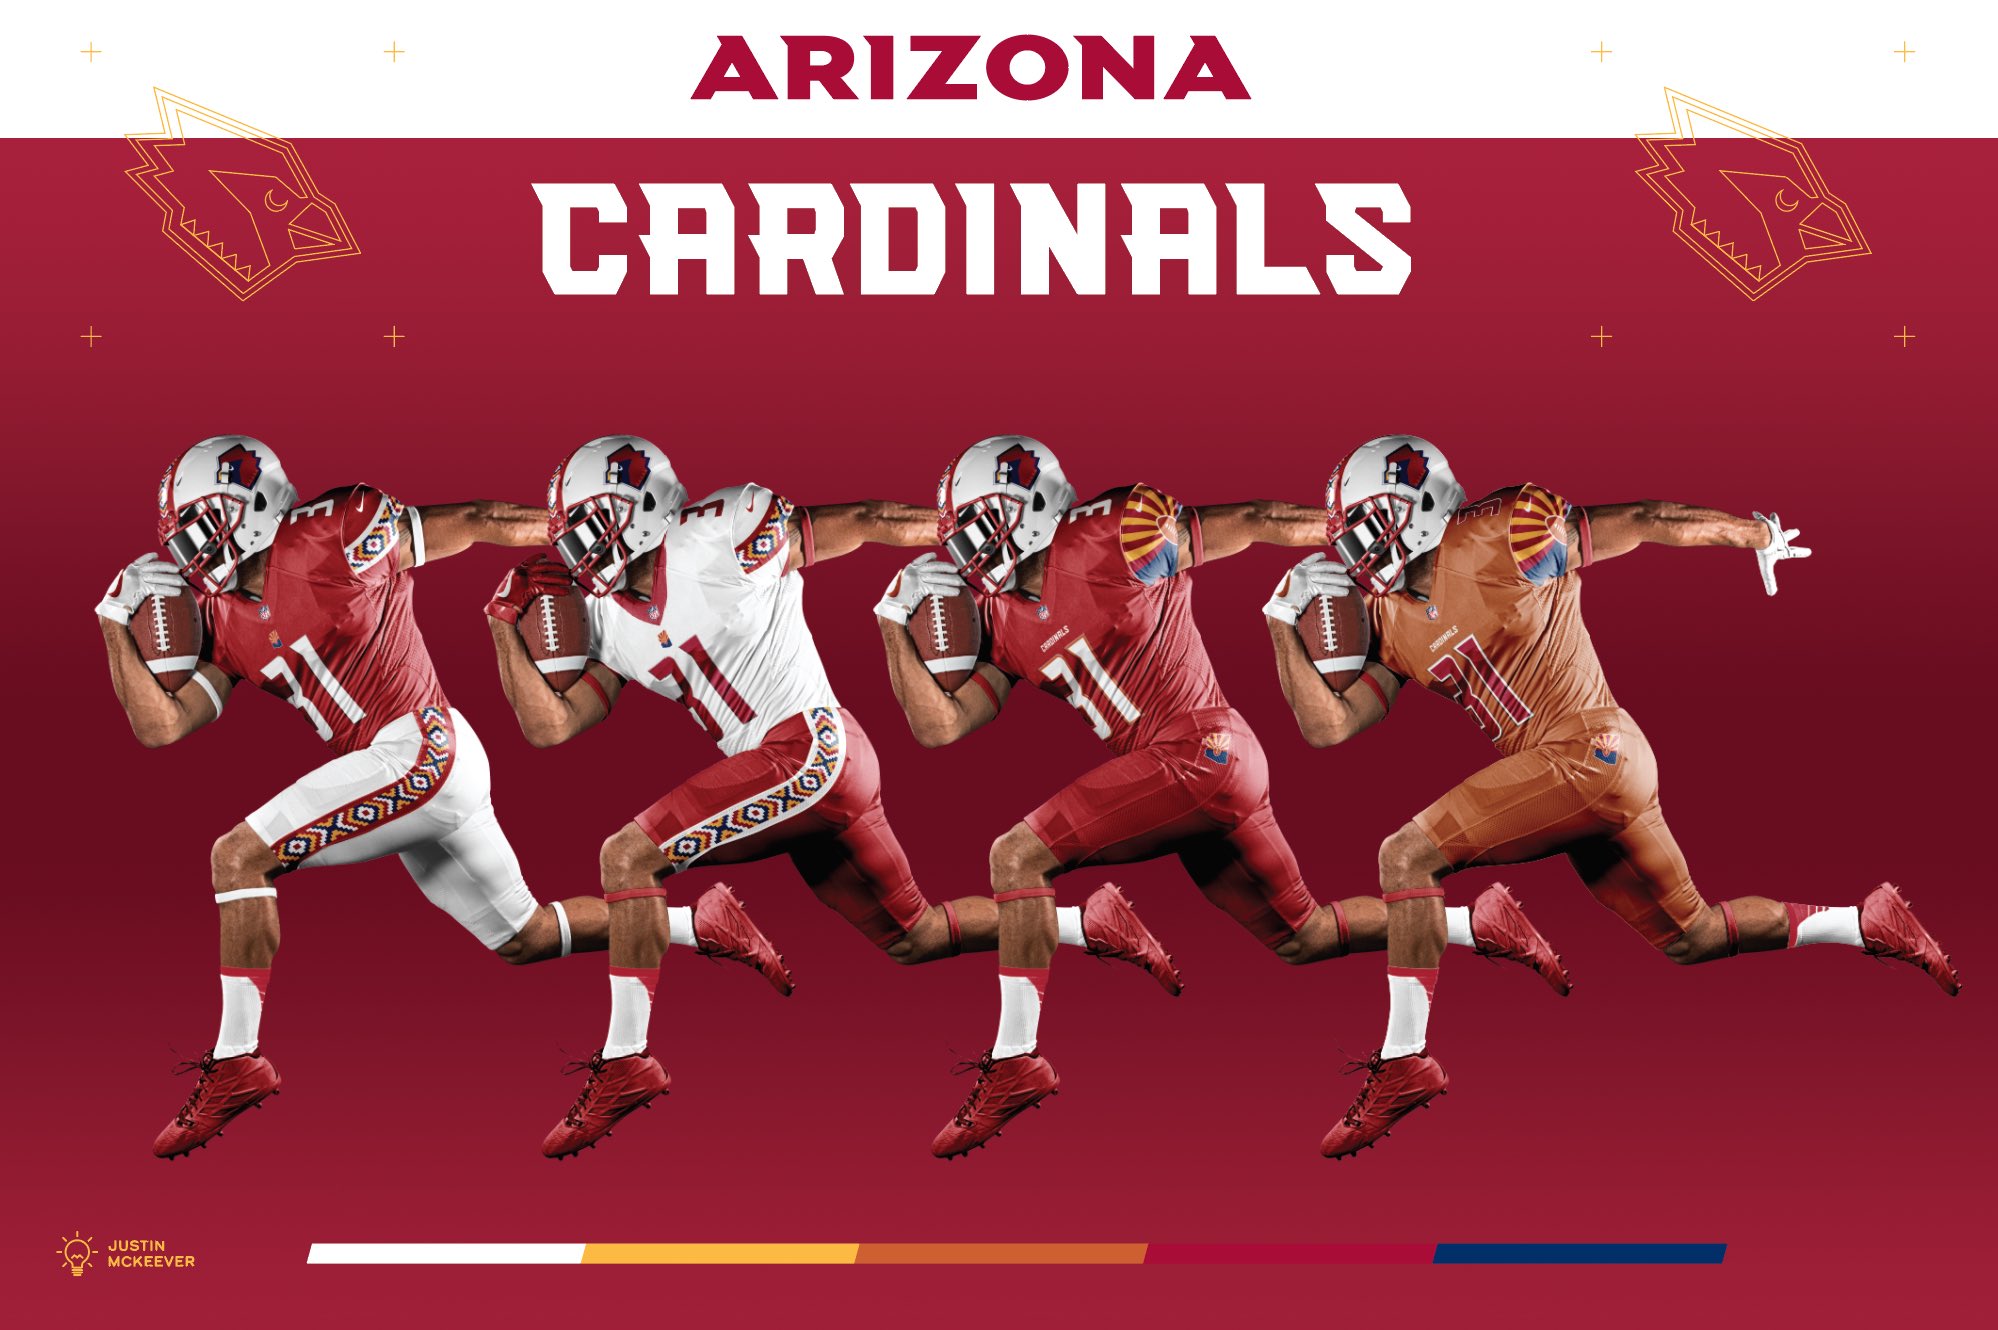 Arizona Cardinals’ Uniform Redesign Contest Results – SportsLogos.Net News